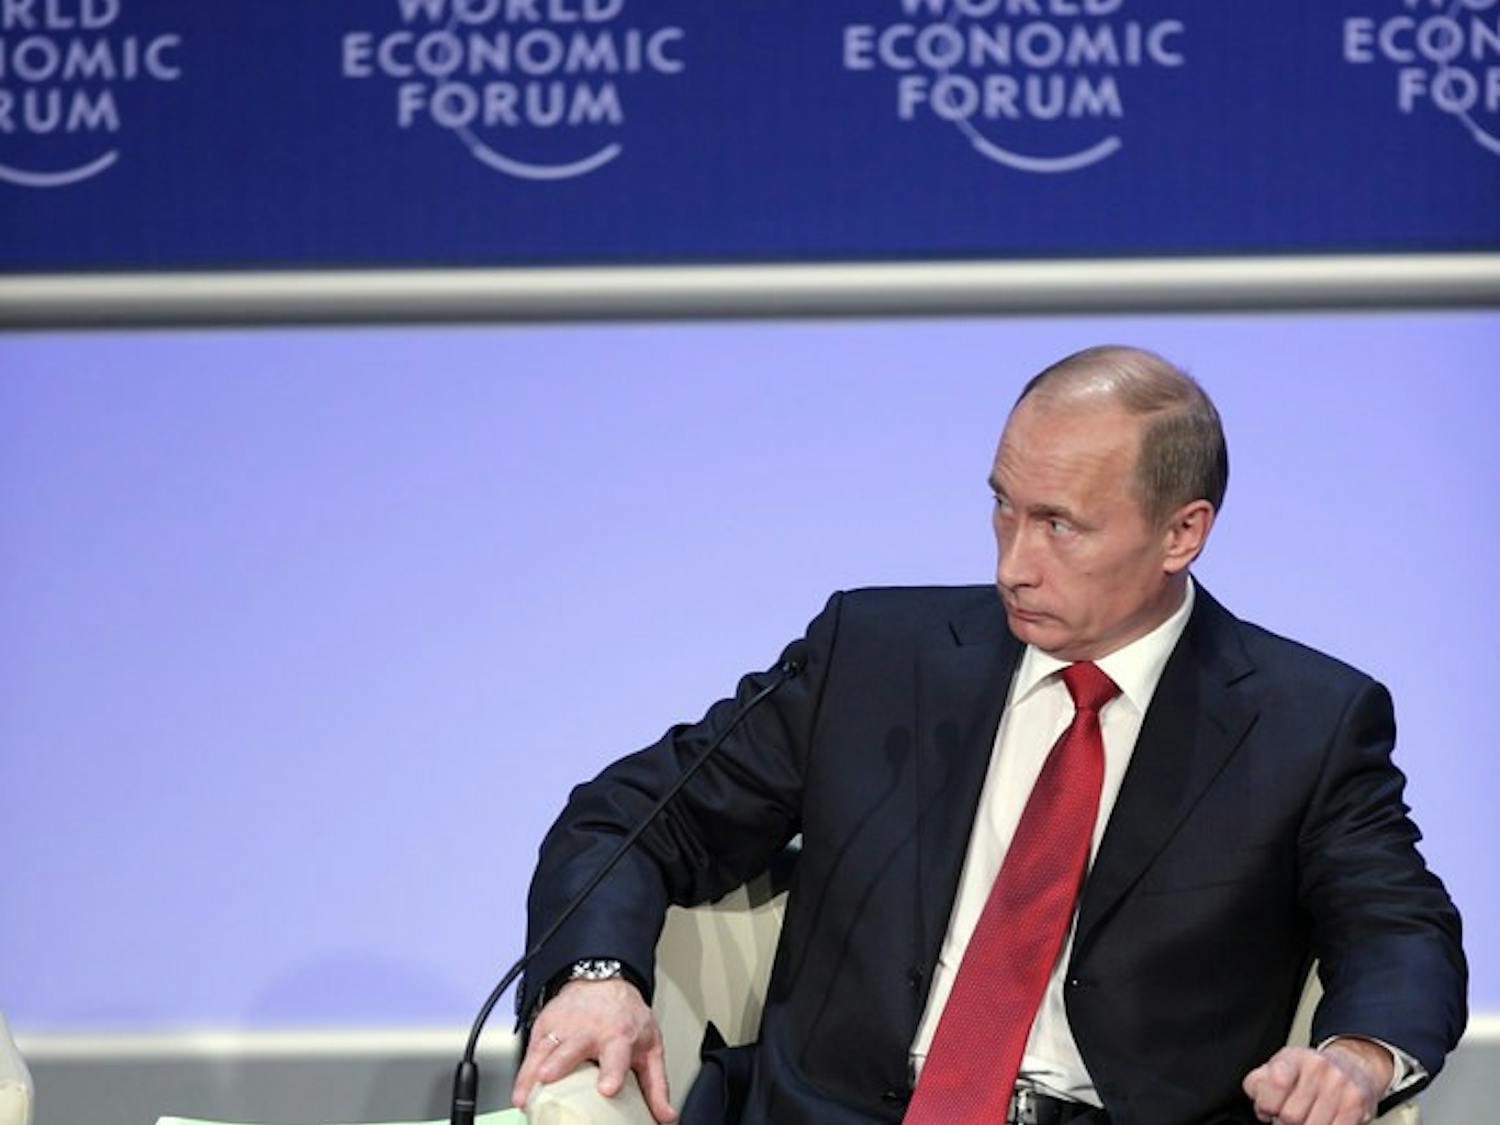 WorldEconomicForum_Putin.jpeg